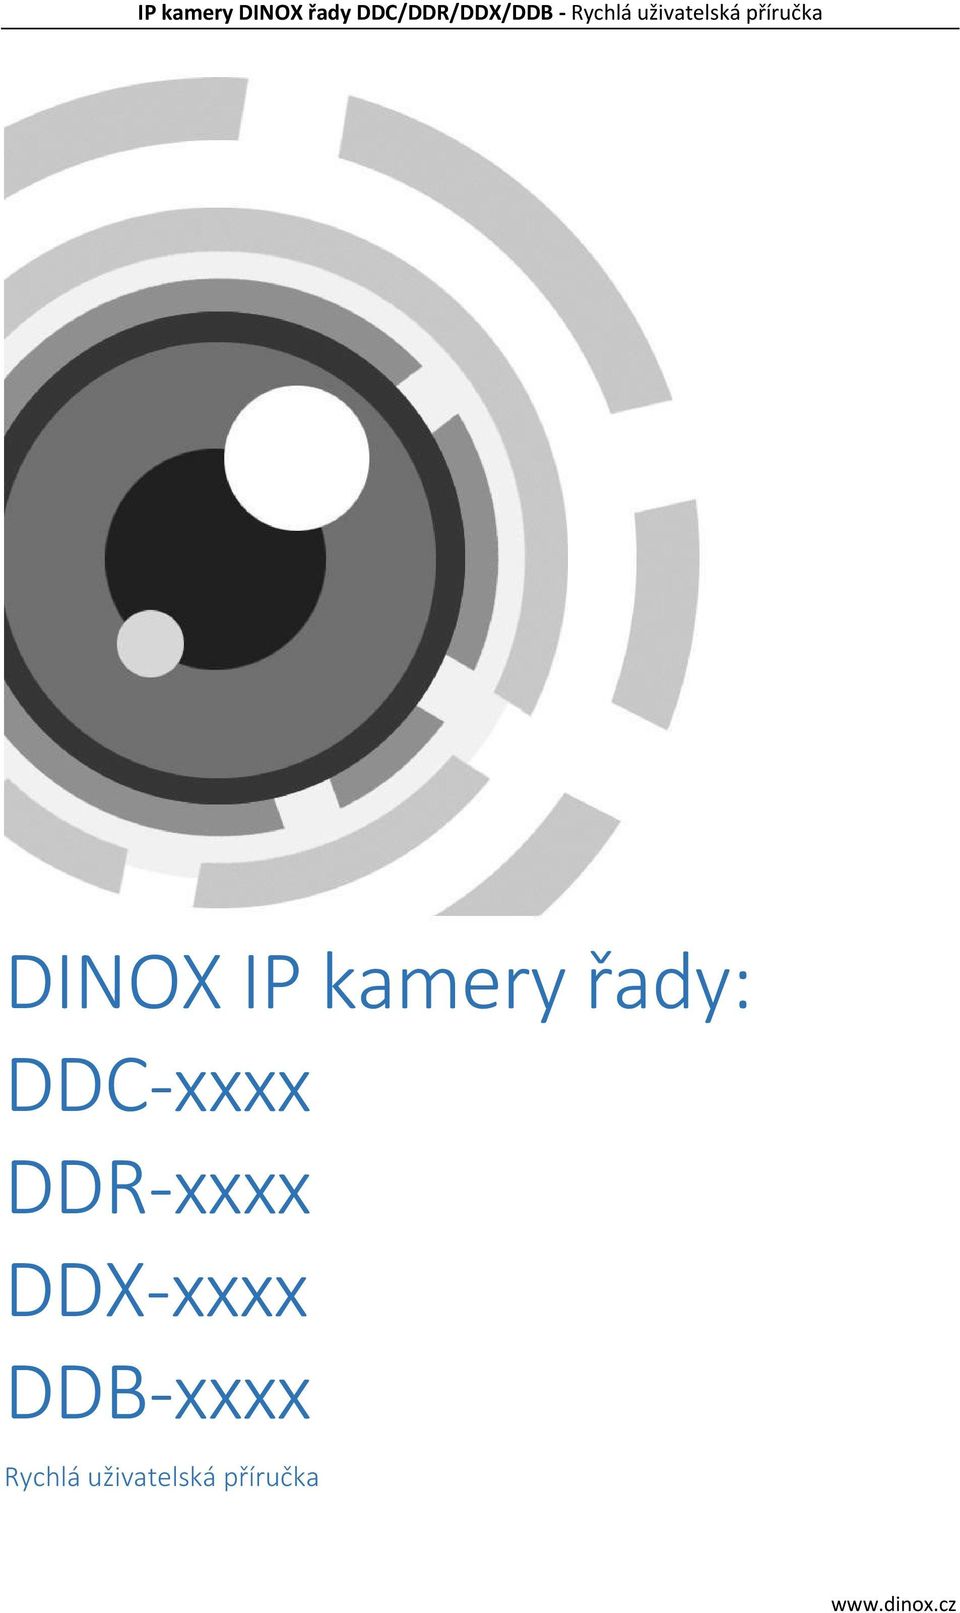 DDX-xxxx DDB-xxxx